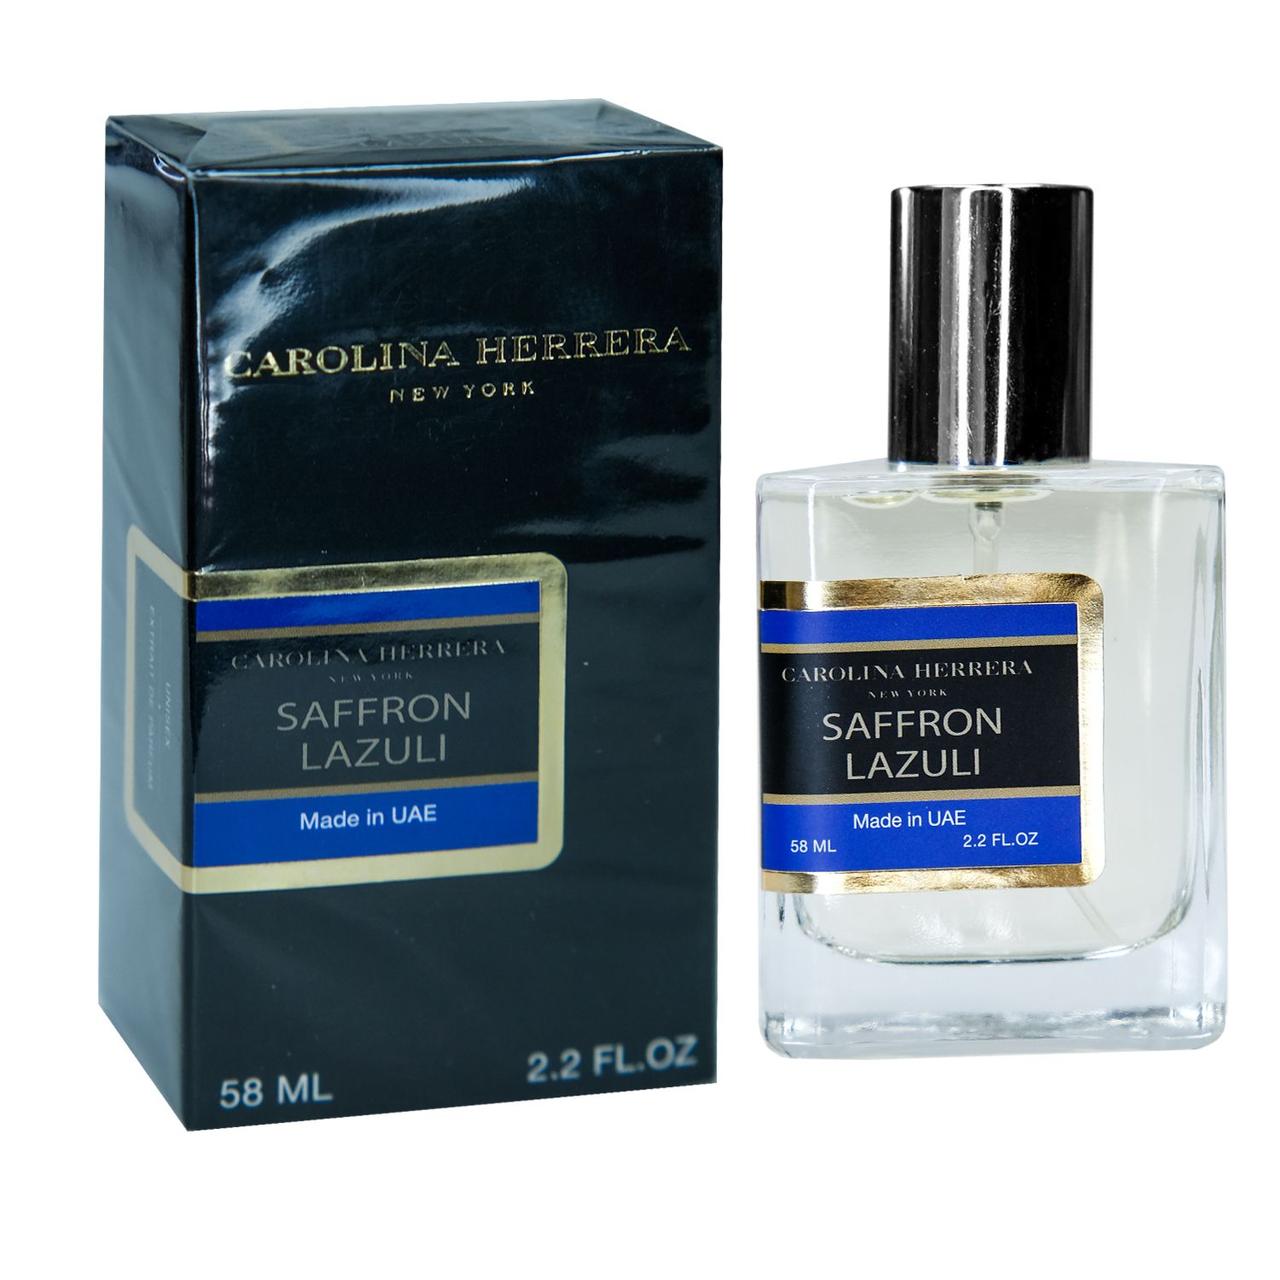 Carolina Herrera Saffron Lazuli Perfume Newly унисекс, 58 мл